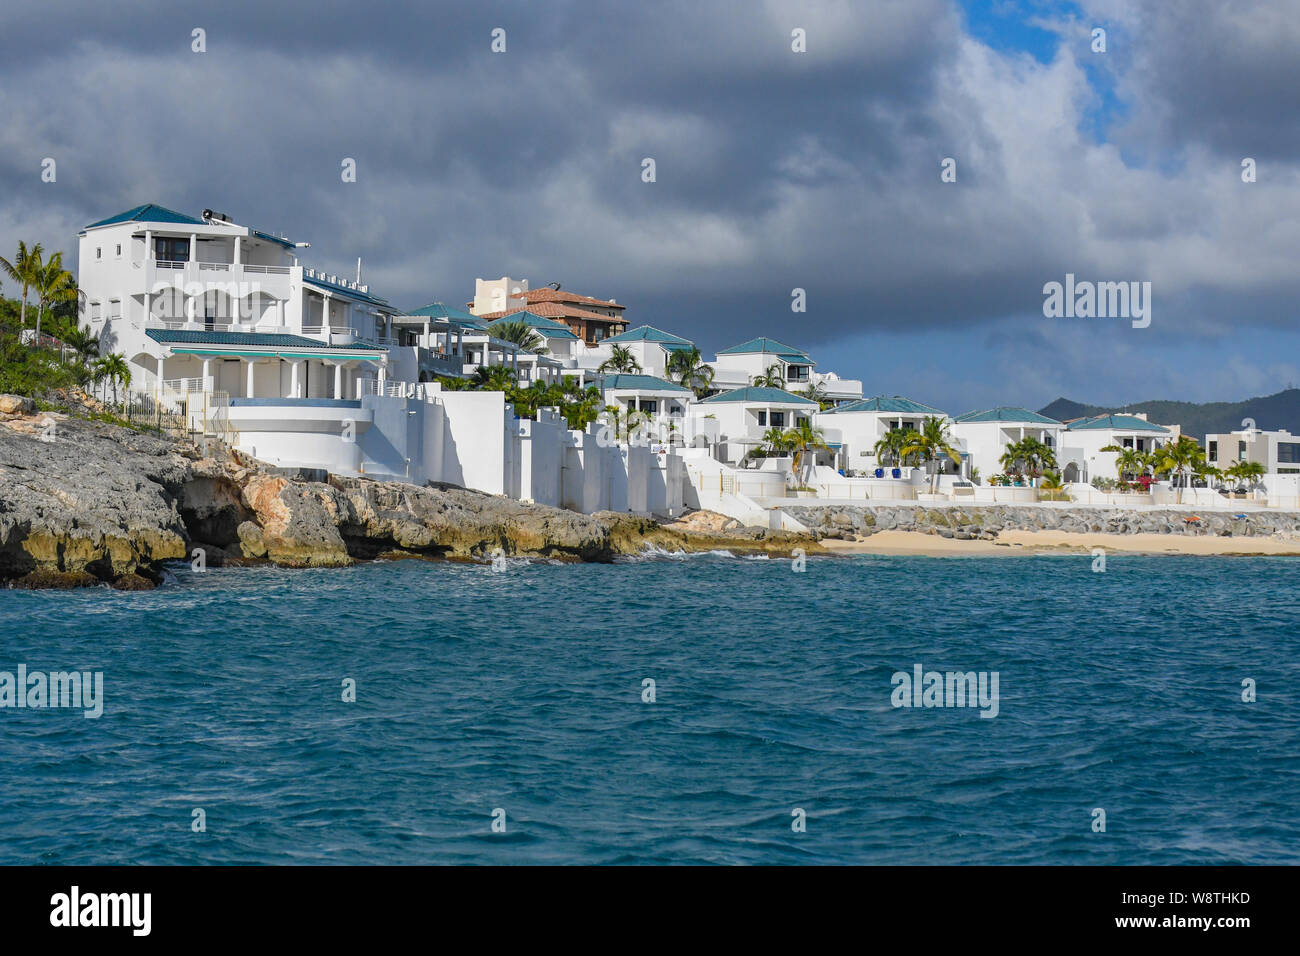 Sint Maarten weather - sunny island of Saint-Martin - luxury homes on a Caribbean beach and tropical houses on St. Maarten - island mansions Stock Photo